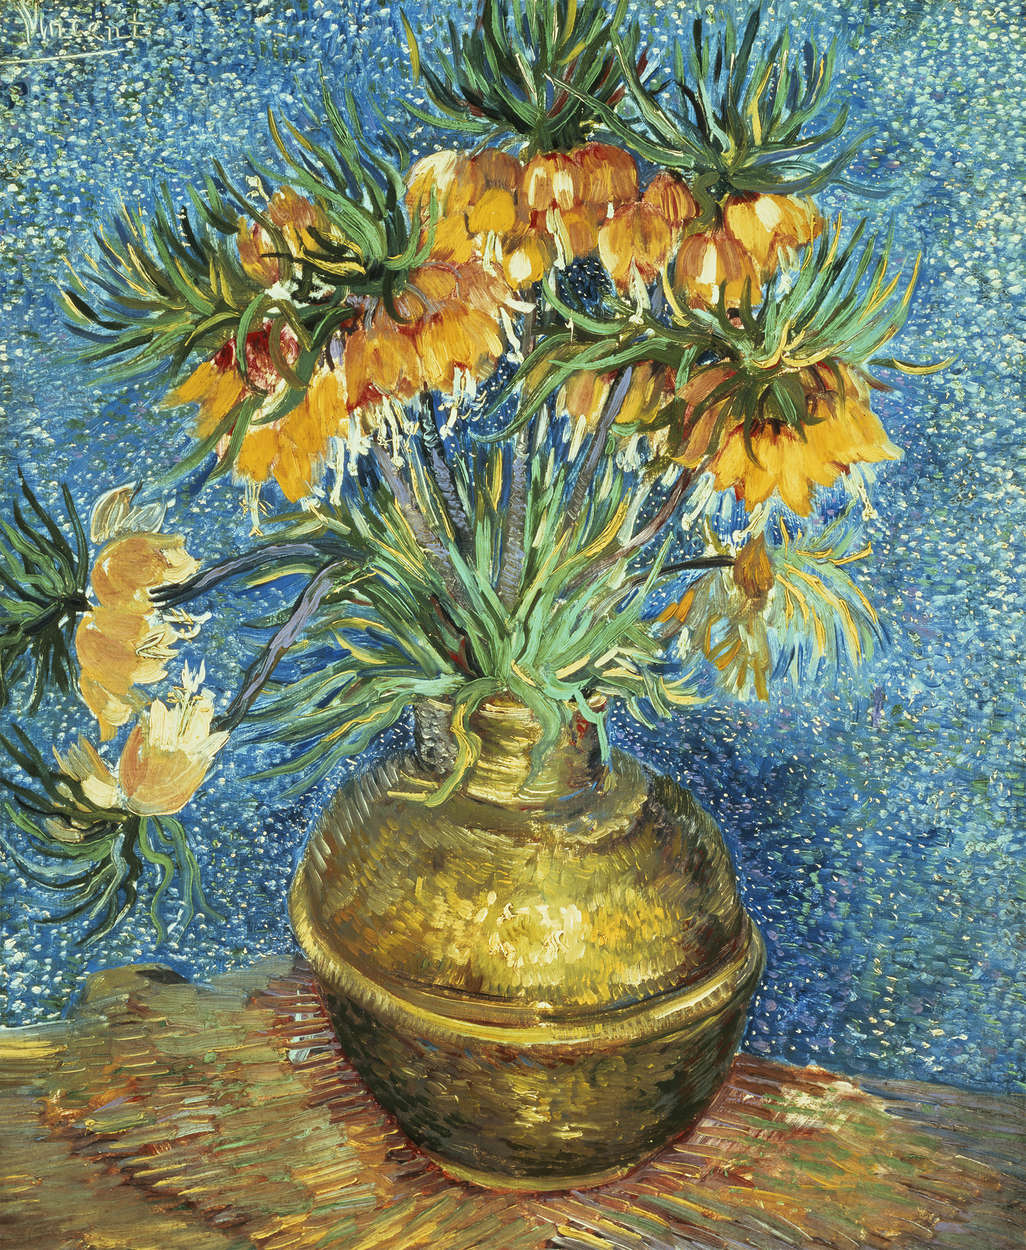             Fotomurali "Fritillaria, corona imperiale in un vaso di rame" di Vincent van Gogh
        